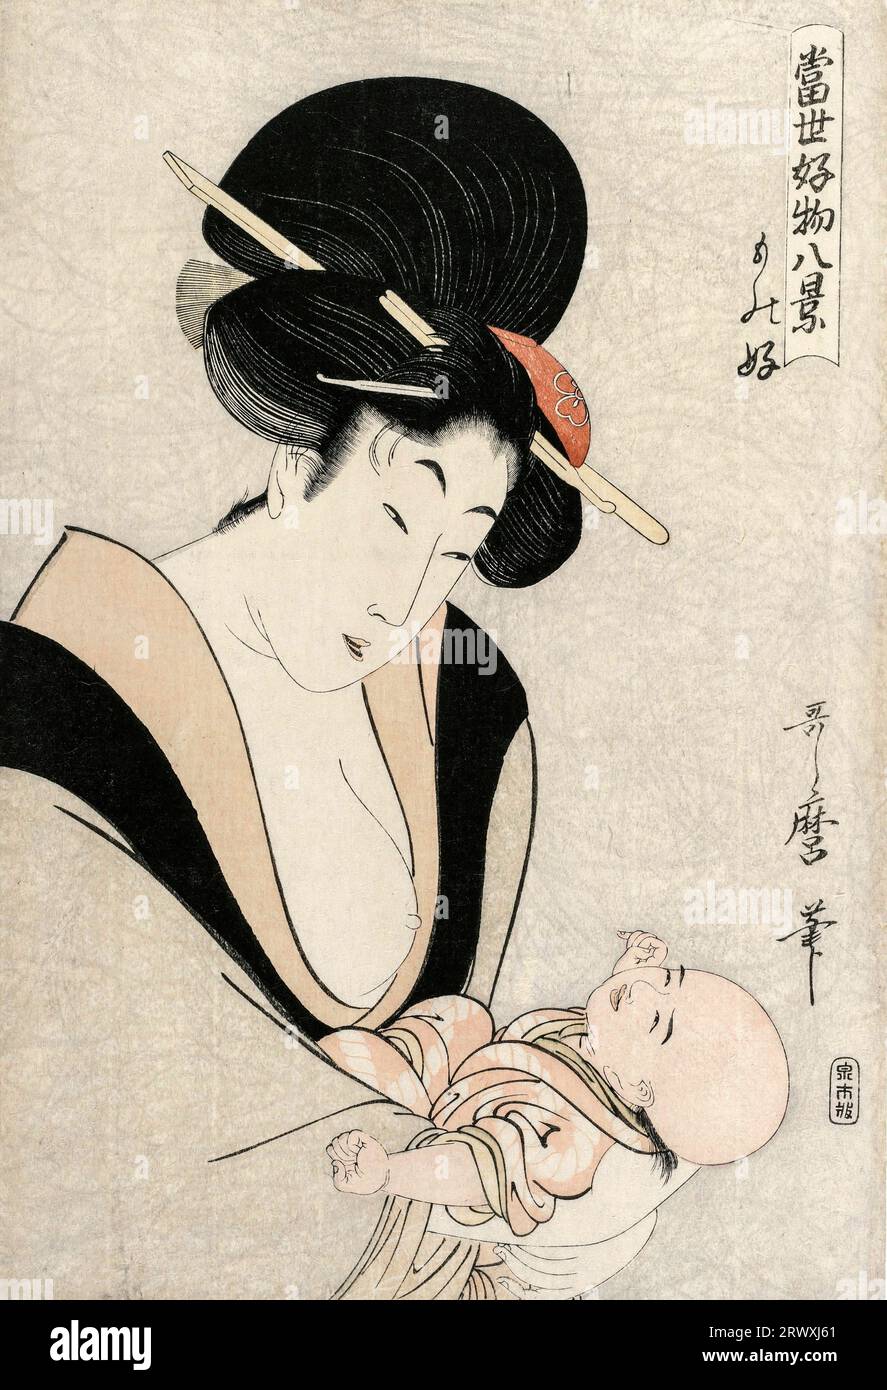 Fond of Things aus der Serie Eight Views of Favorite Things of Today's World von Kitagawa Utamaro (ca. 1753-1806), Farbholzschnitt, Ende der 1790er Jahre Stockfoto